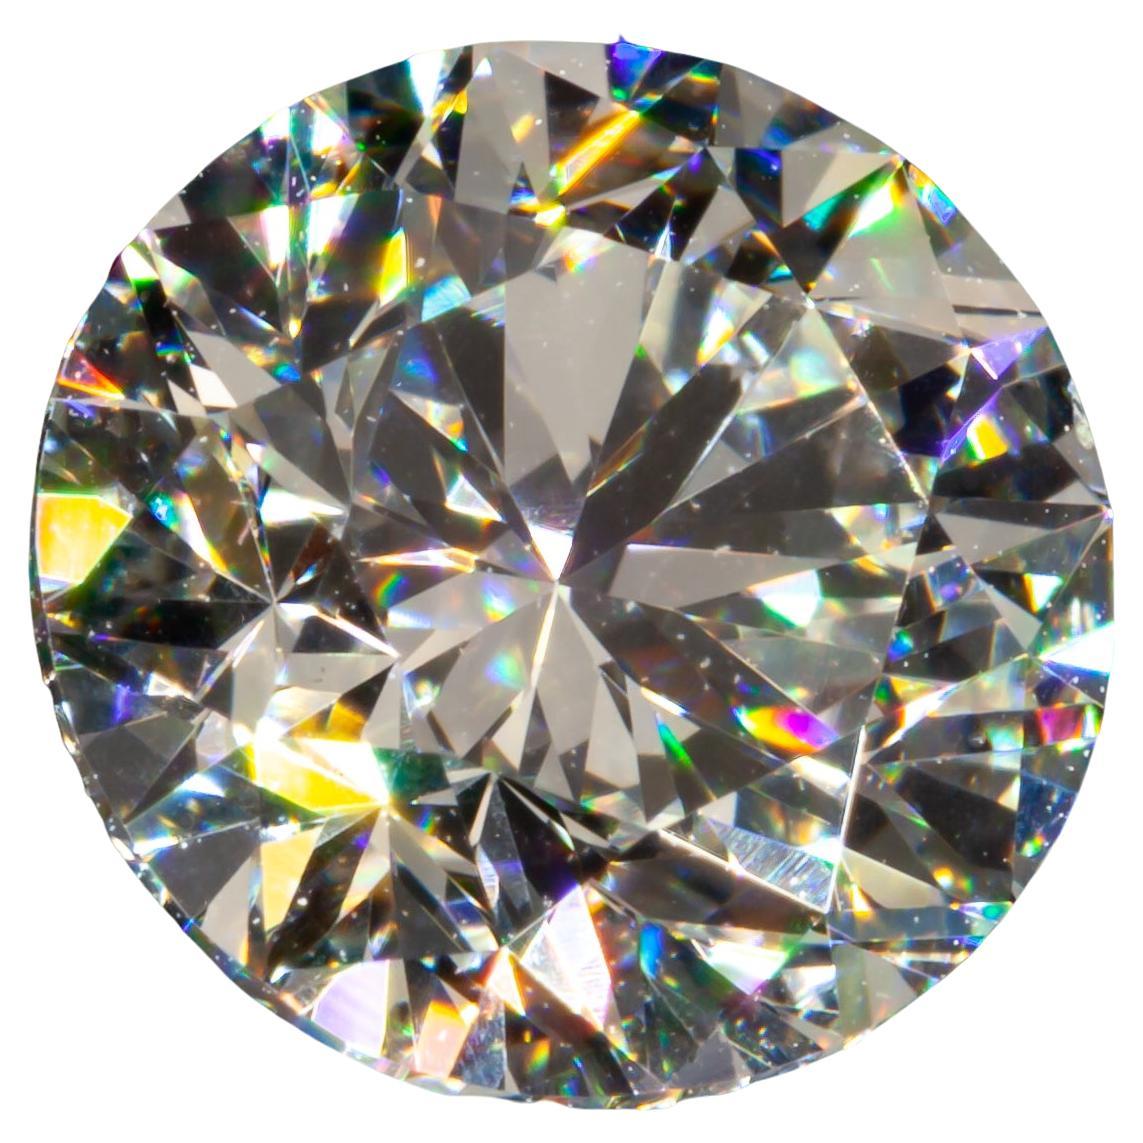 Diamant taille ronde brillant de 1,52 carat non serti H / VS2 certifié GIA